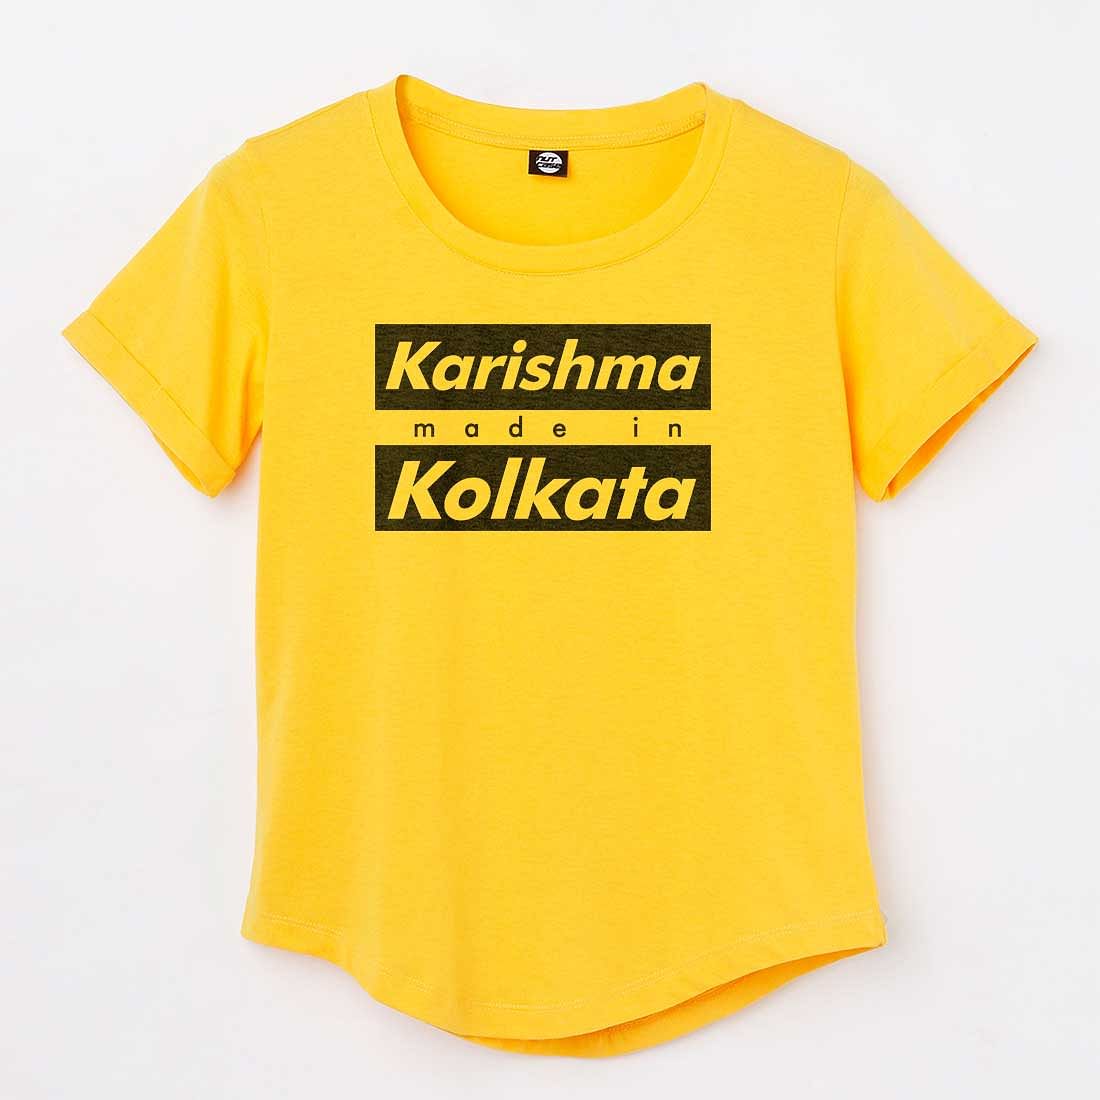 Custom Tees Printing Women's Tshirt - Made in Kolkata Nutcase